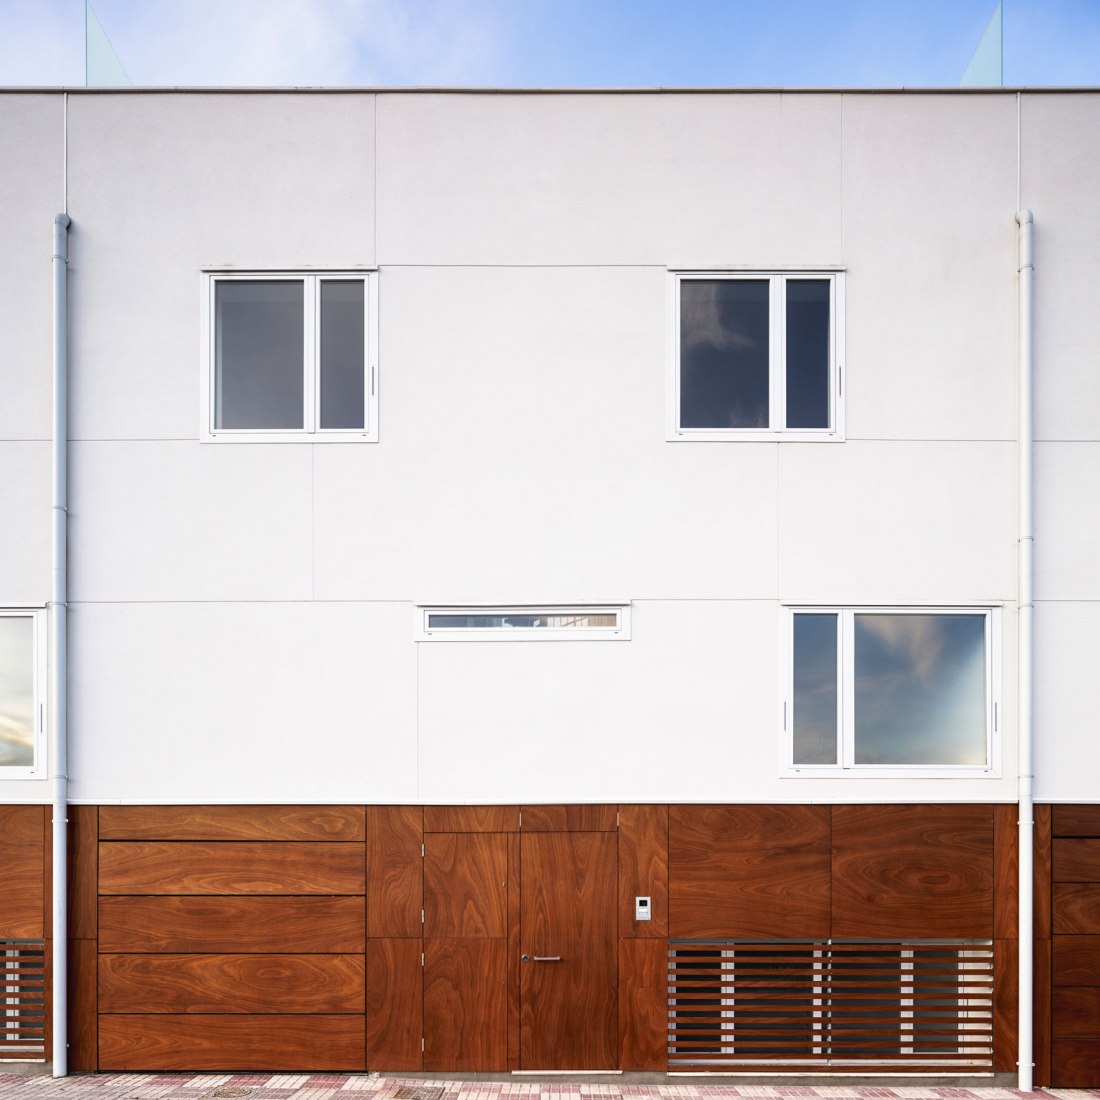 Project of Three Houses in Armilla by Martínez y Soler Arquitectura. Photograph by Fernando Alda.